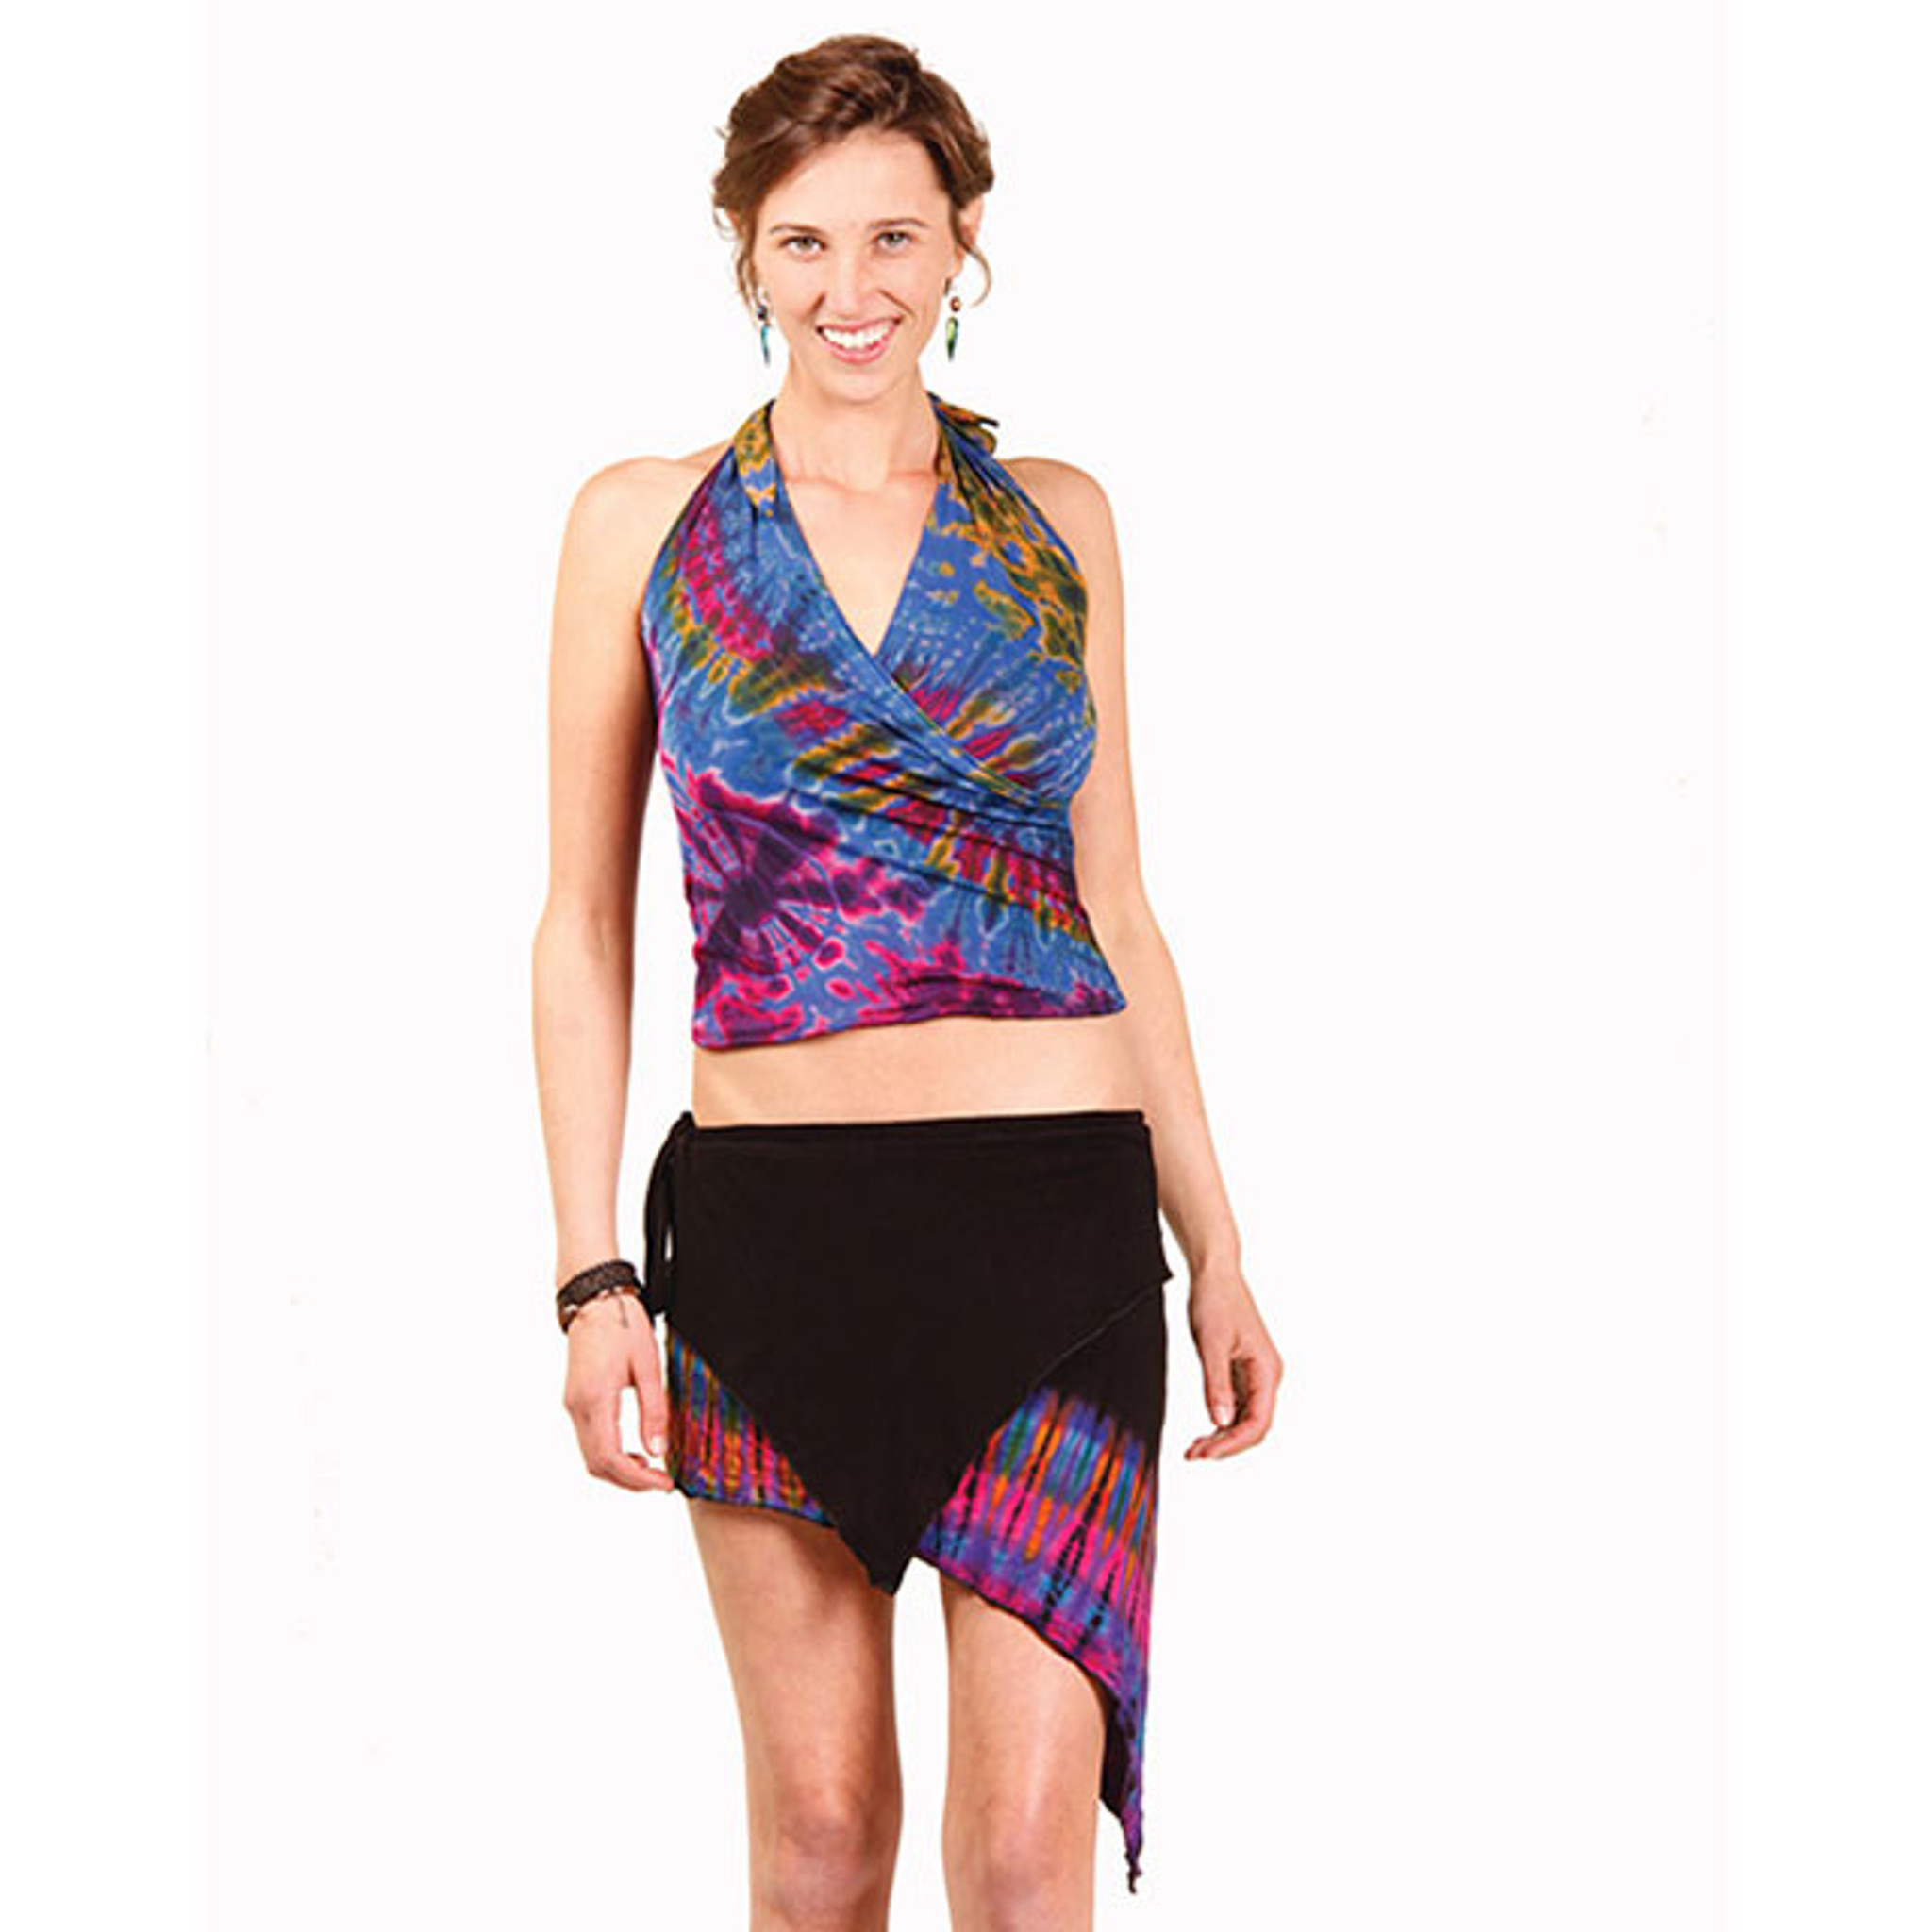 FAIRY SKIRT Rayon Spandex Tie Dye Angle Cut Mini Skirt